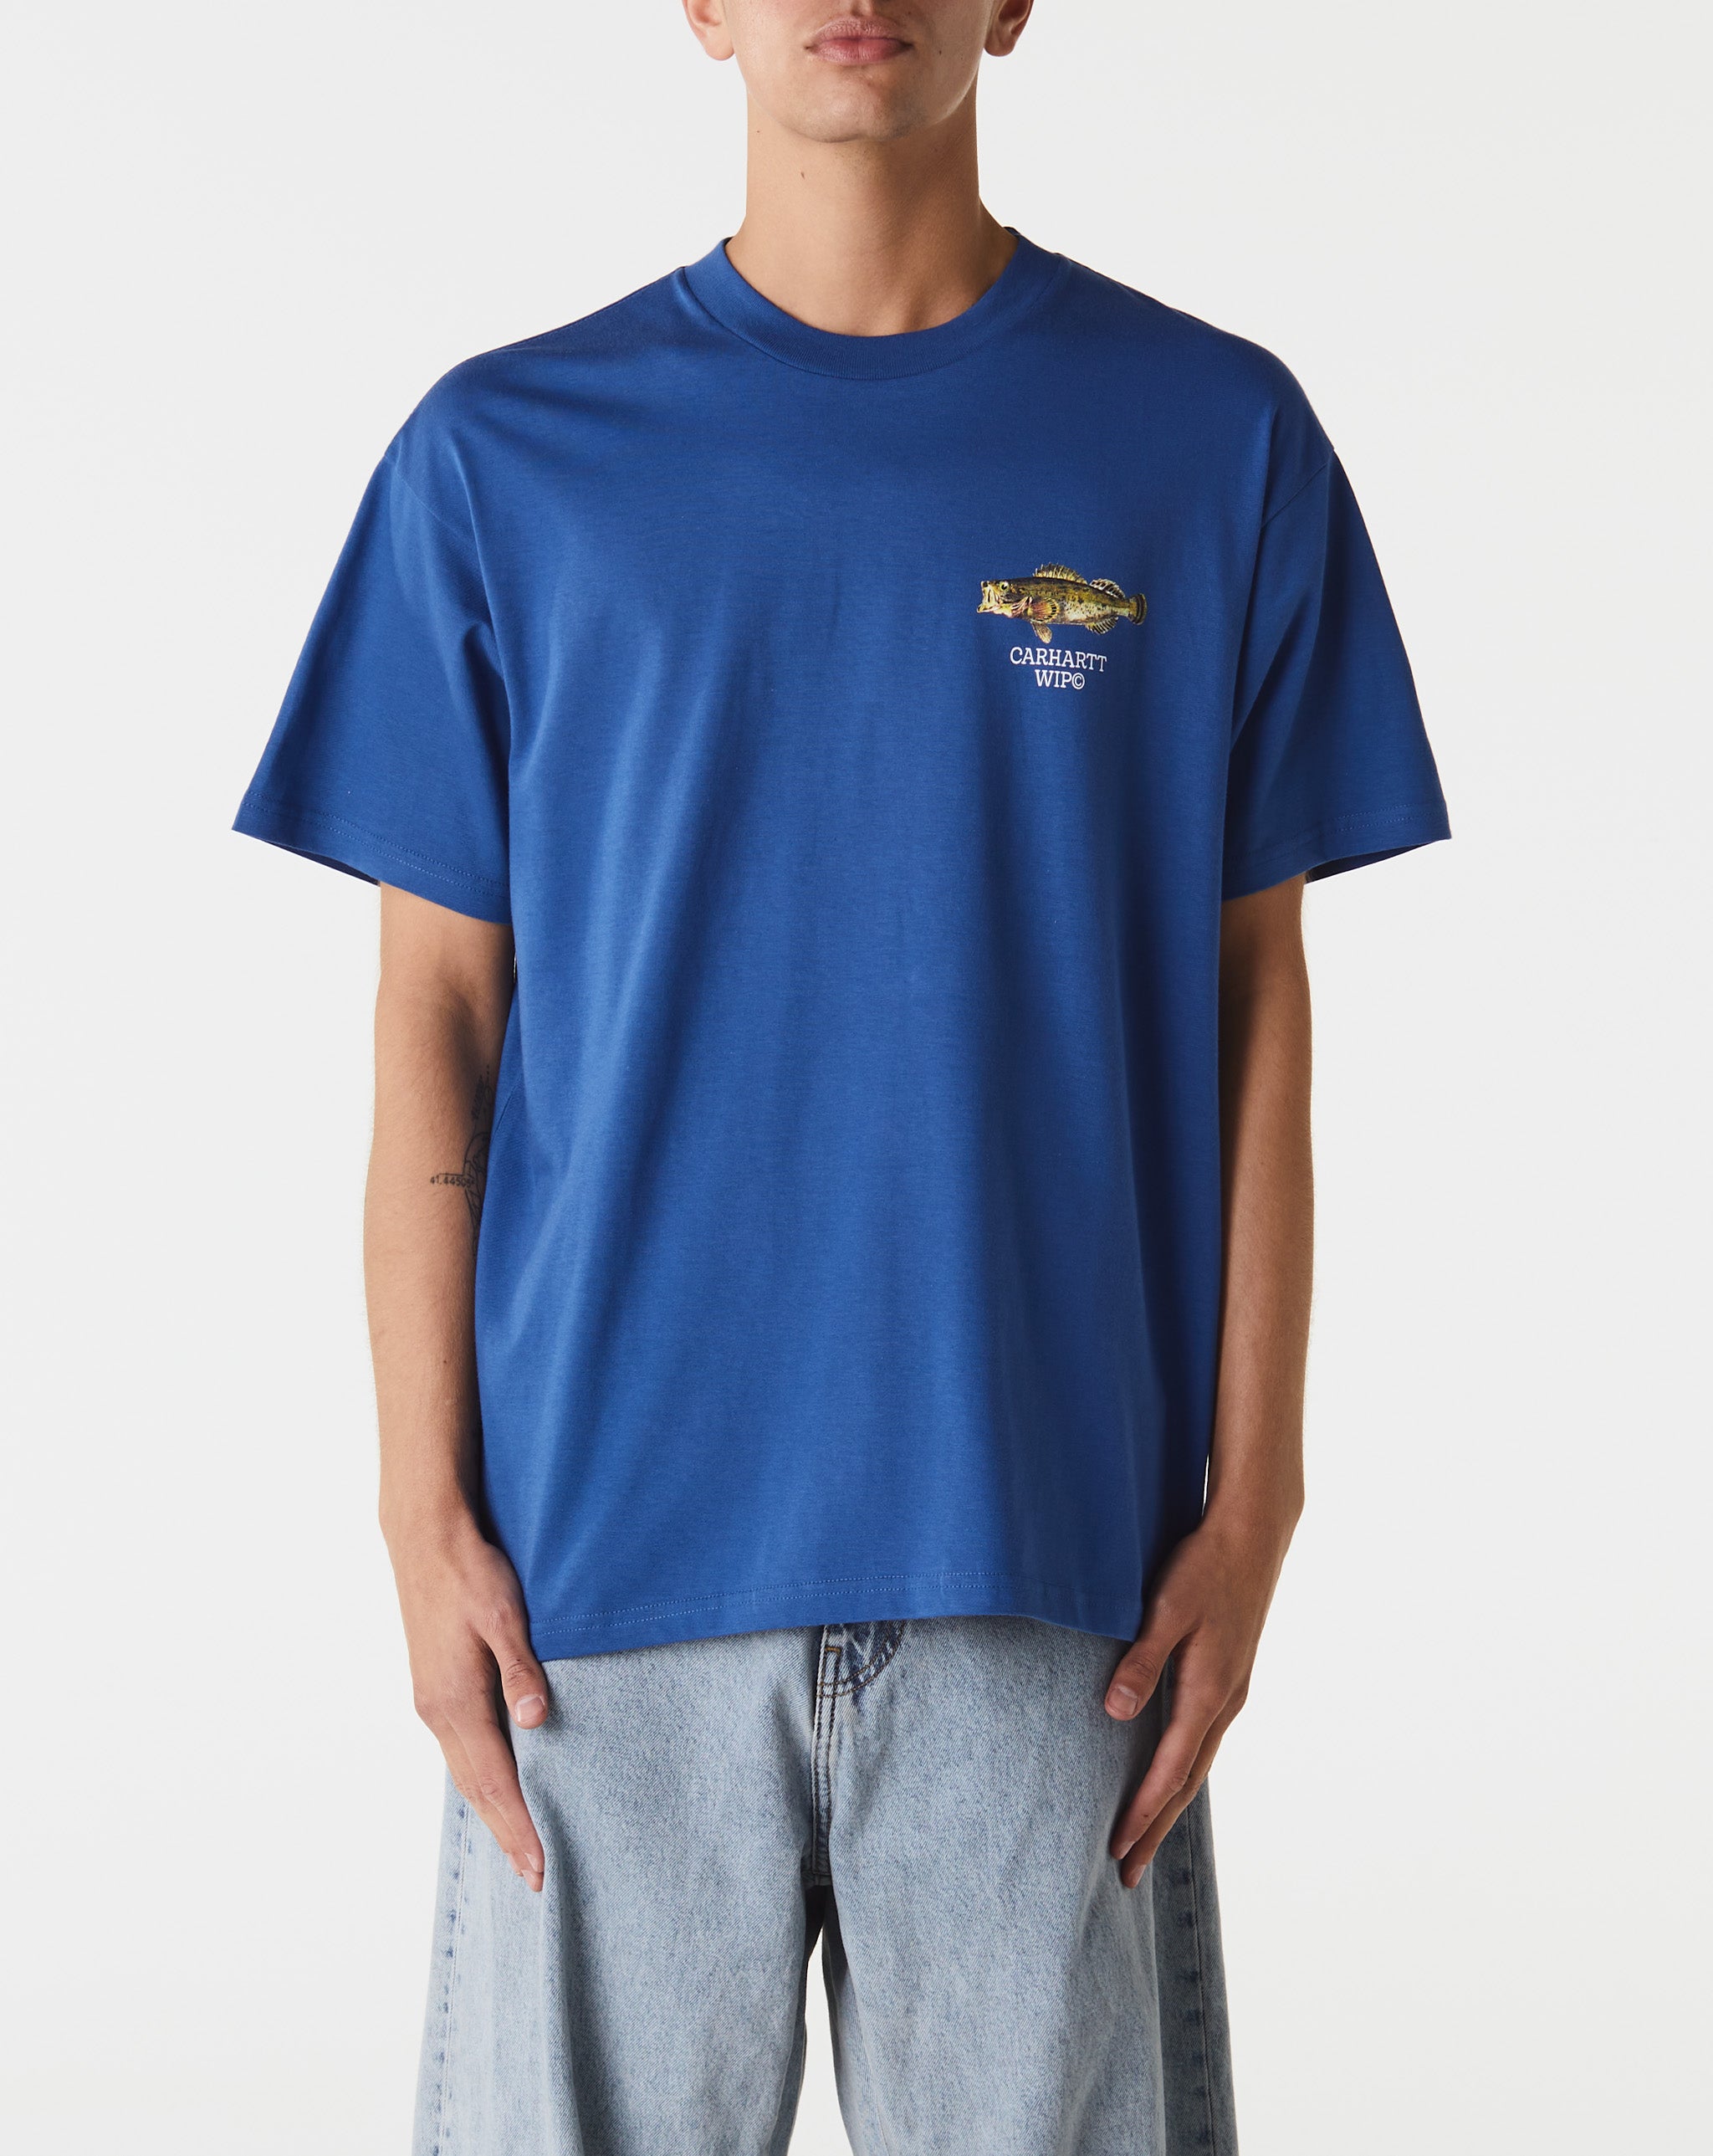 Carhartt WIP Fish T-Shirt  - XHIBITION